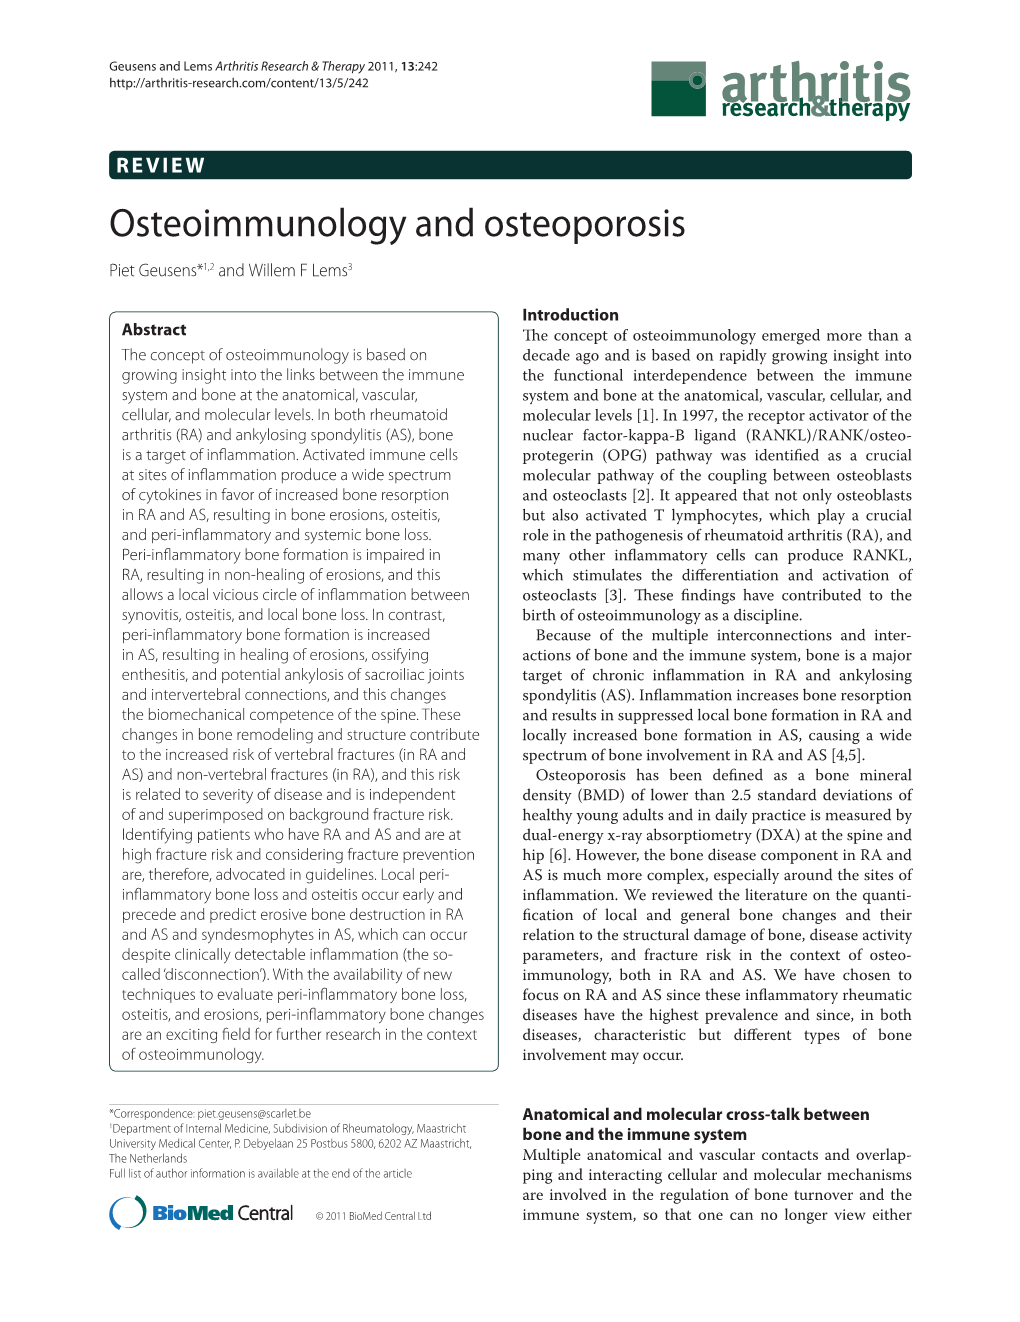 Osteoimmunology and Osteoporosis